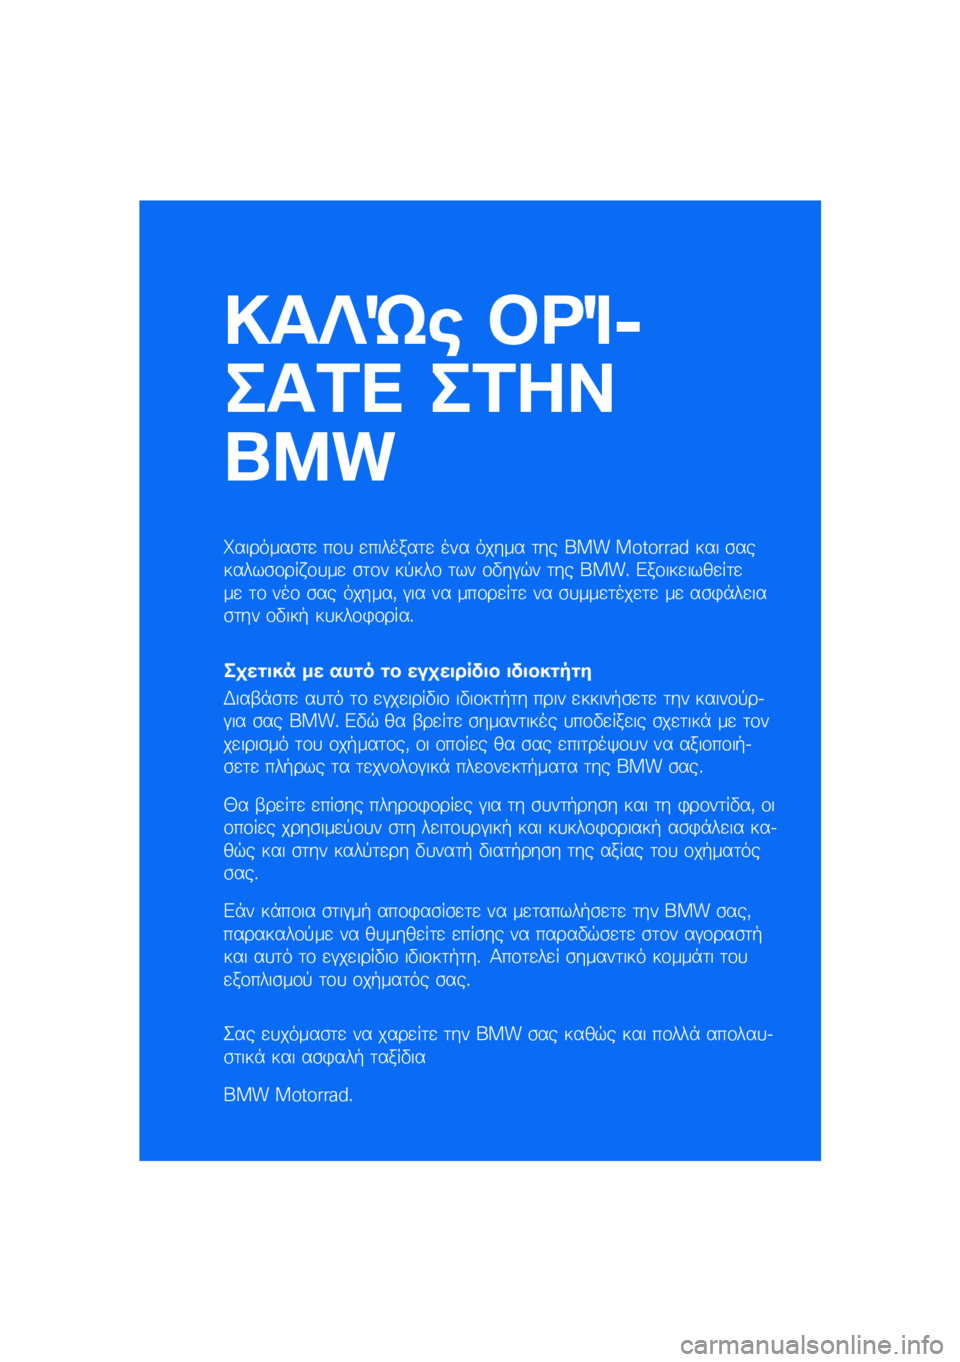 BMW MOTORRAD F 750 GS 2020  Εγχειρίδιο ιδιοκτήτη (in Greek) ����� ��\b�	�

���\f�
 ��\f��
���
��������\b�	�
 ��\f�
 �
�������	�
 ��� ����� �	�� ��� �������� ��� �\b�������\b�\f��� �\f�
��
 �\b�	�\f�